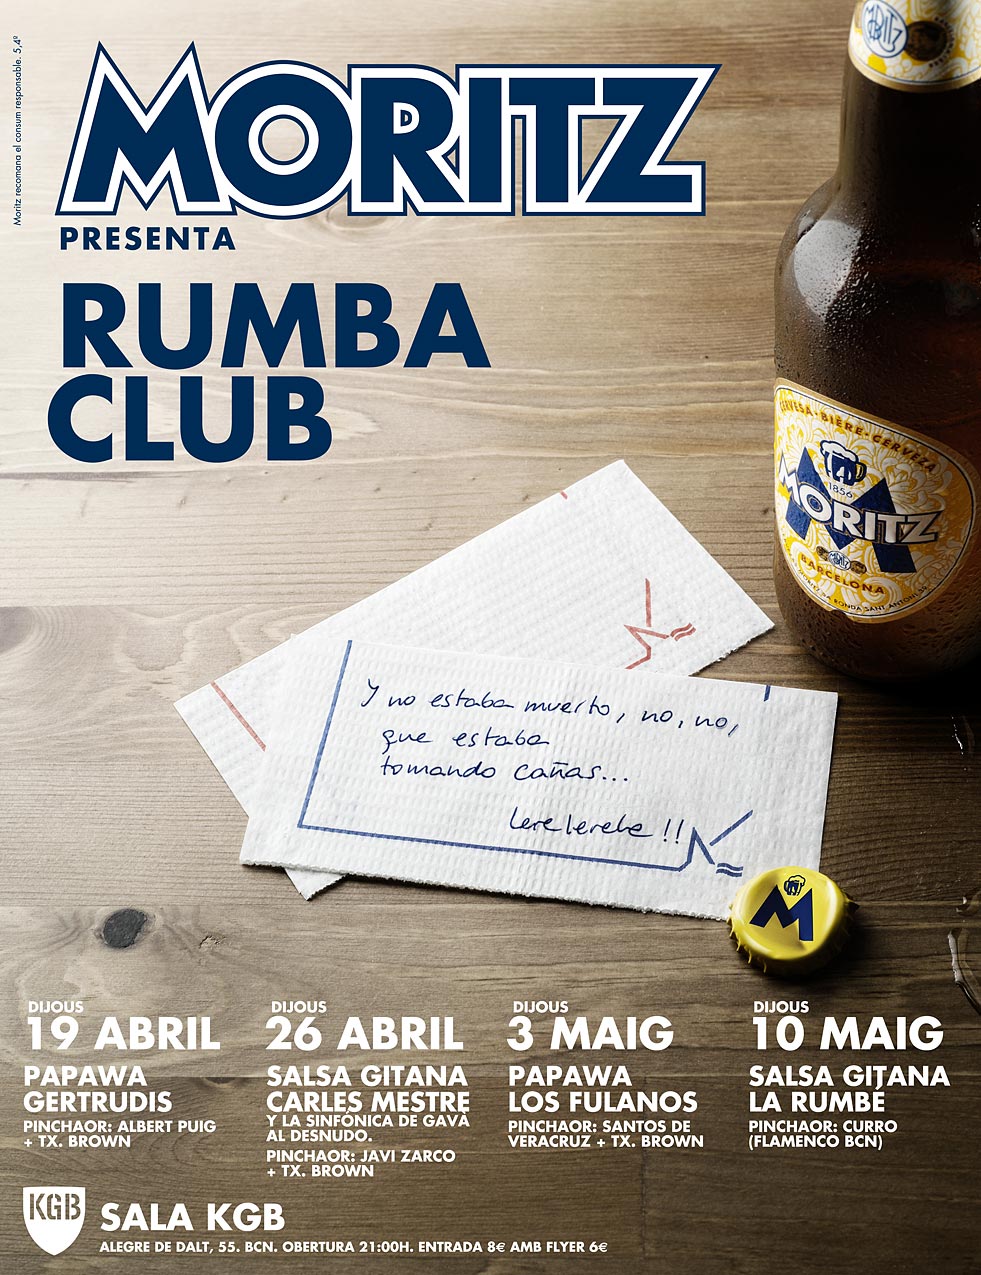 Moritz Rumba Club